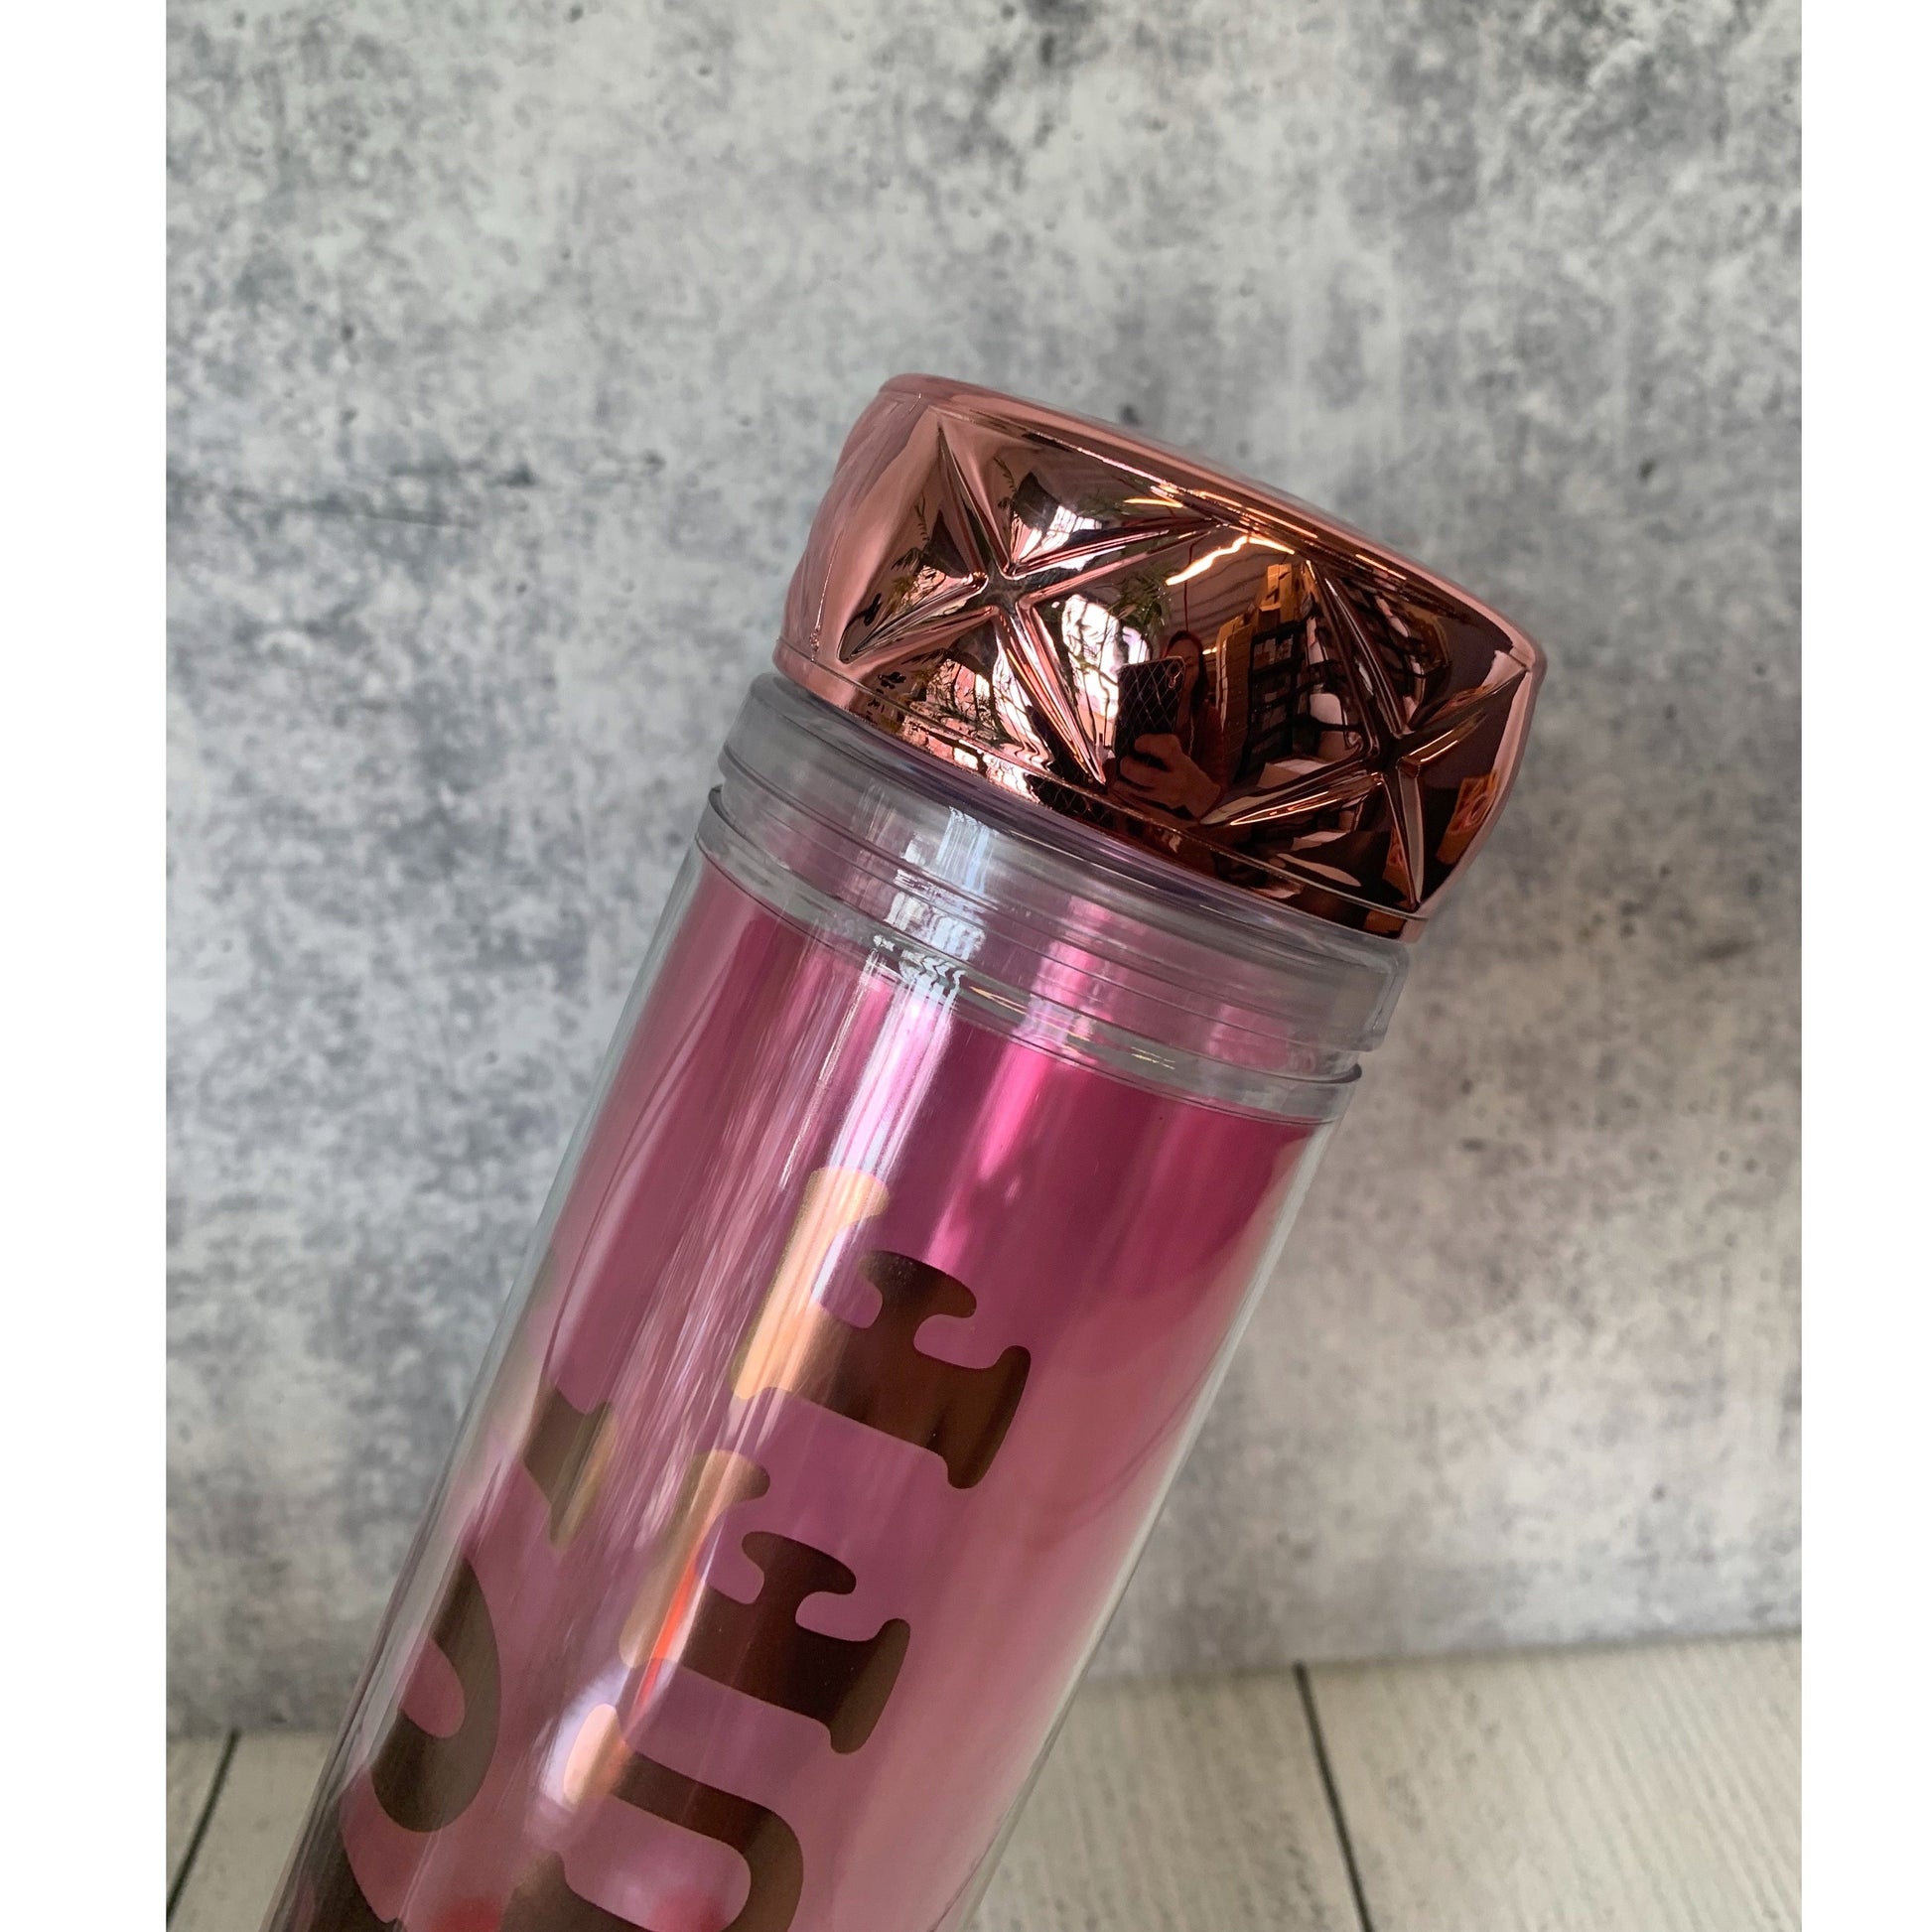 Hot Stuff Pink Fade Water Bottle | Double-Wall Acrylic